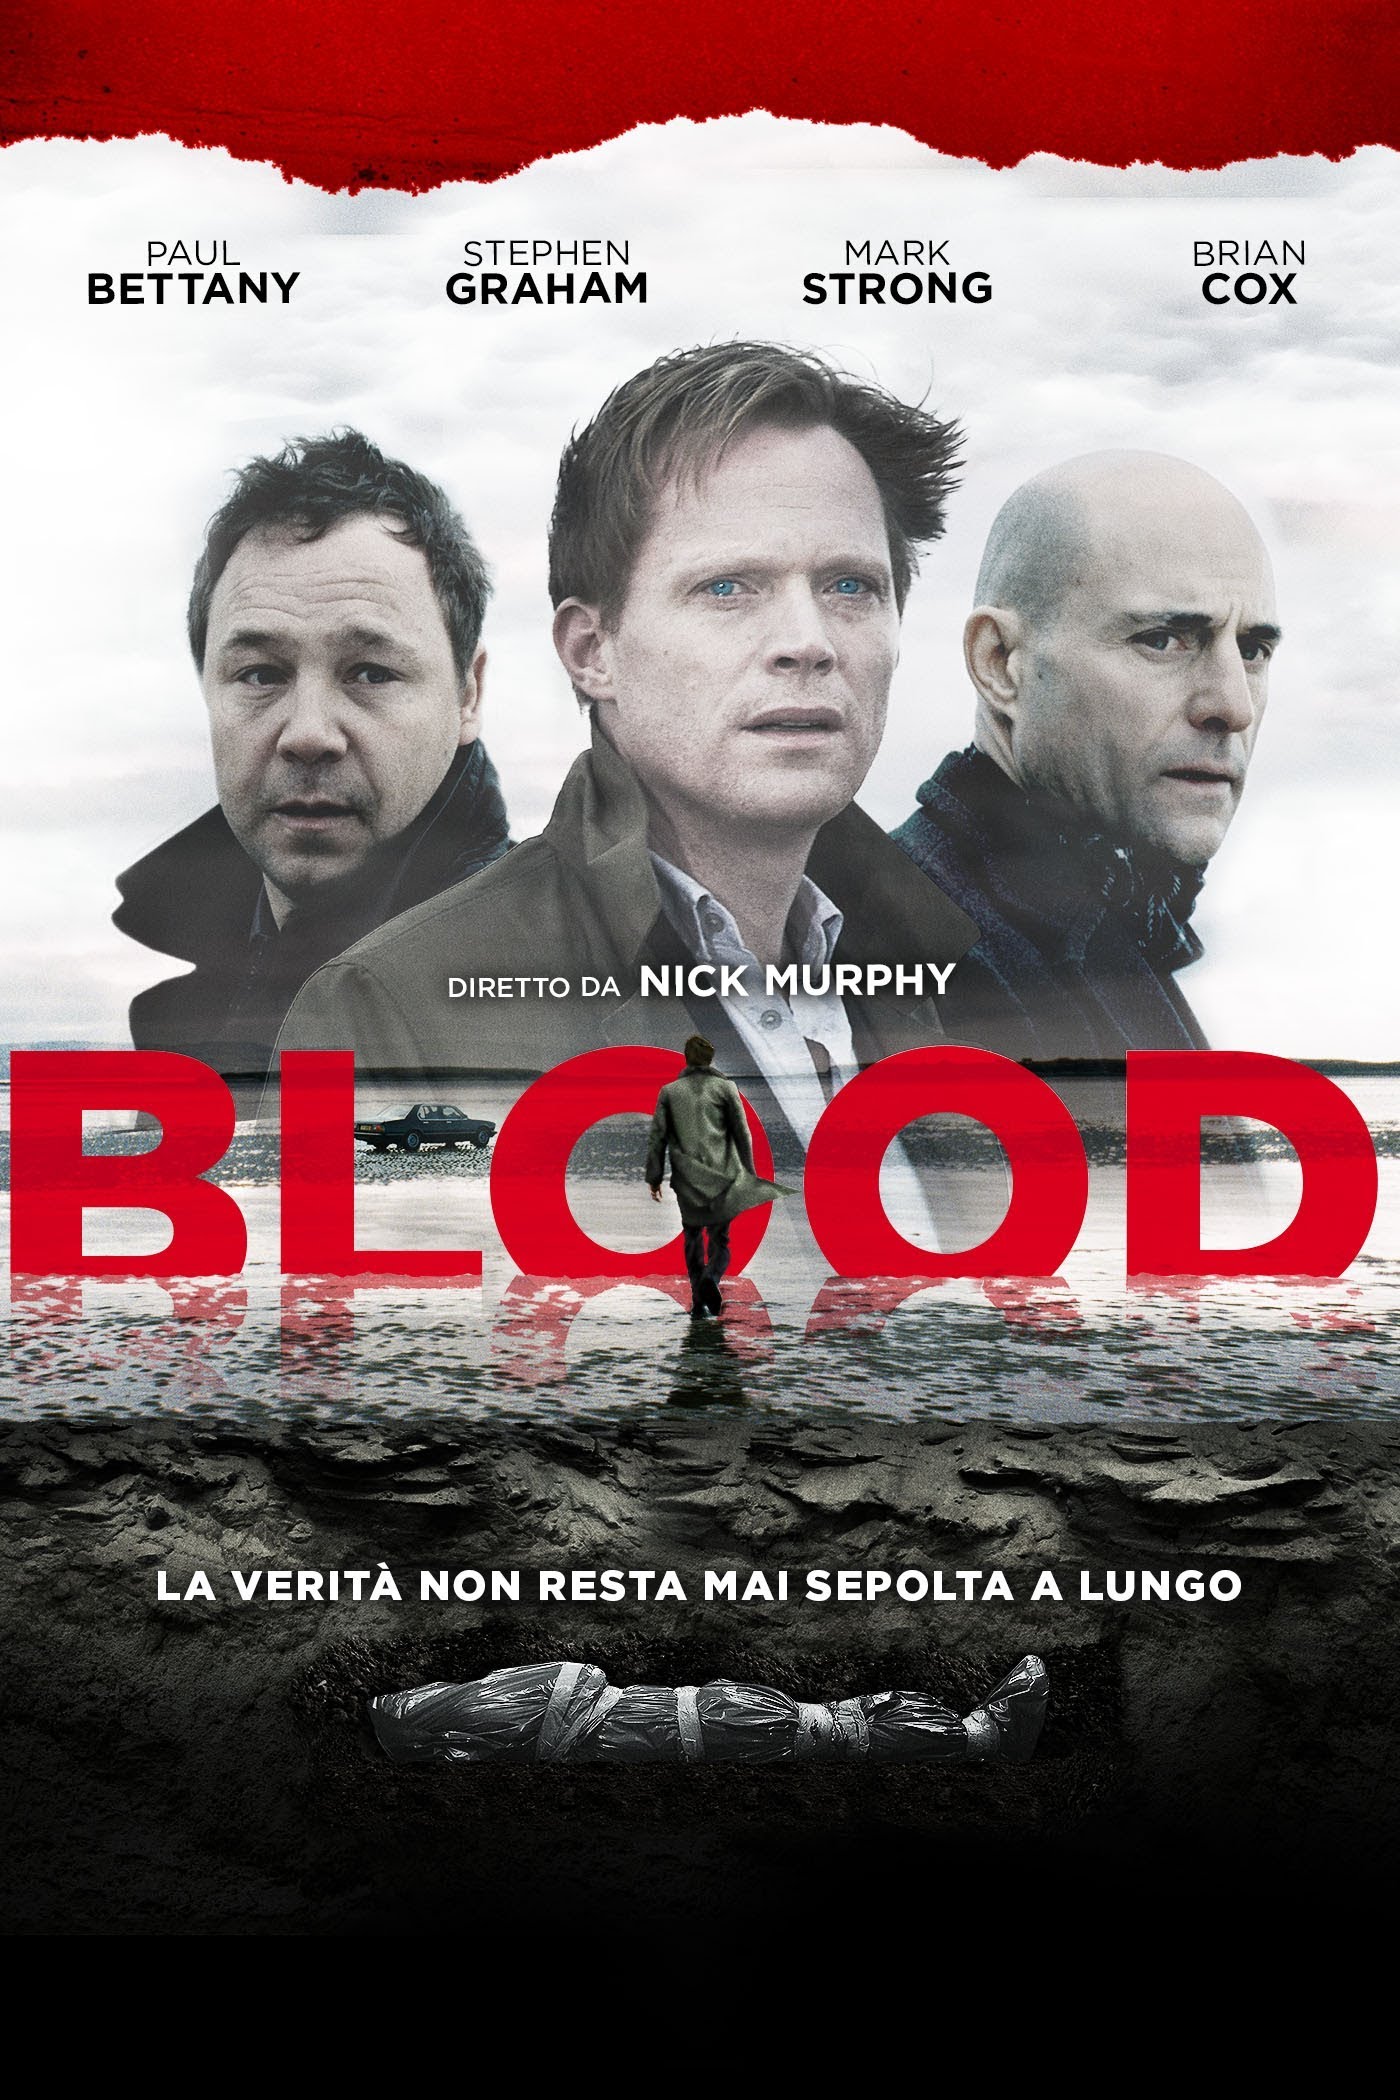 Blood [HD] (2013)